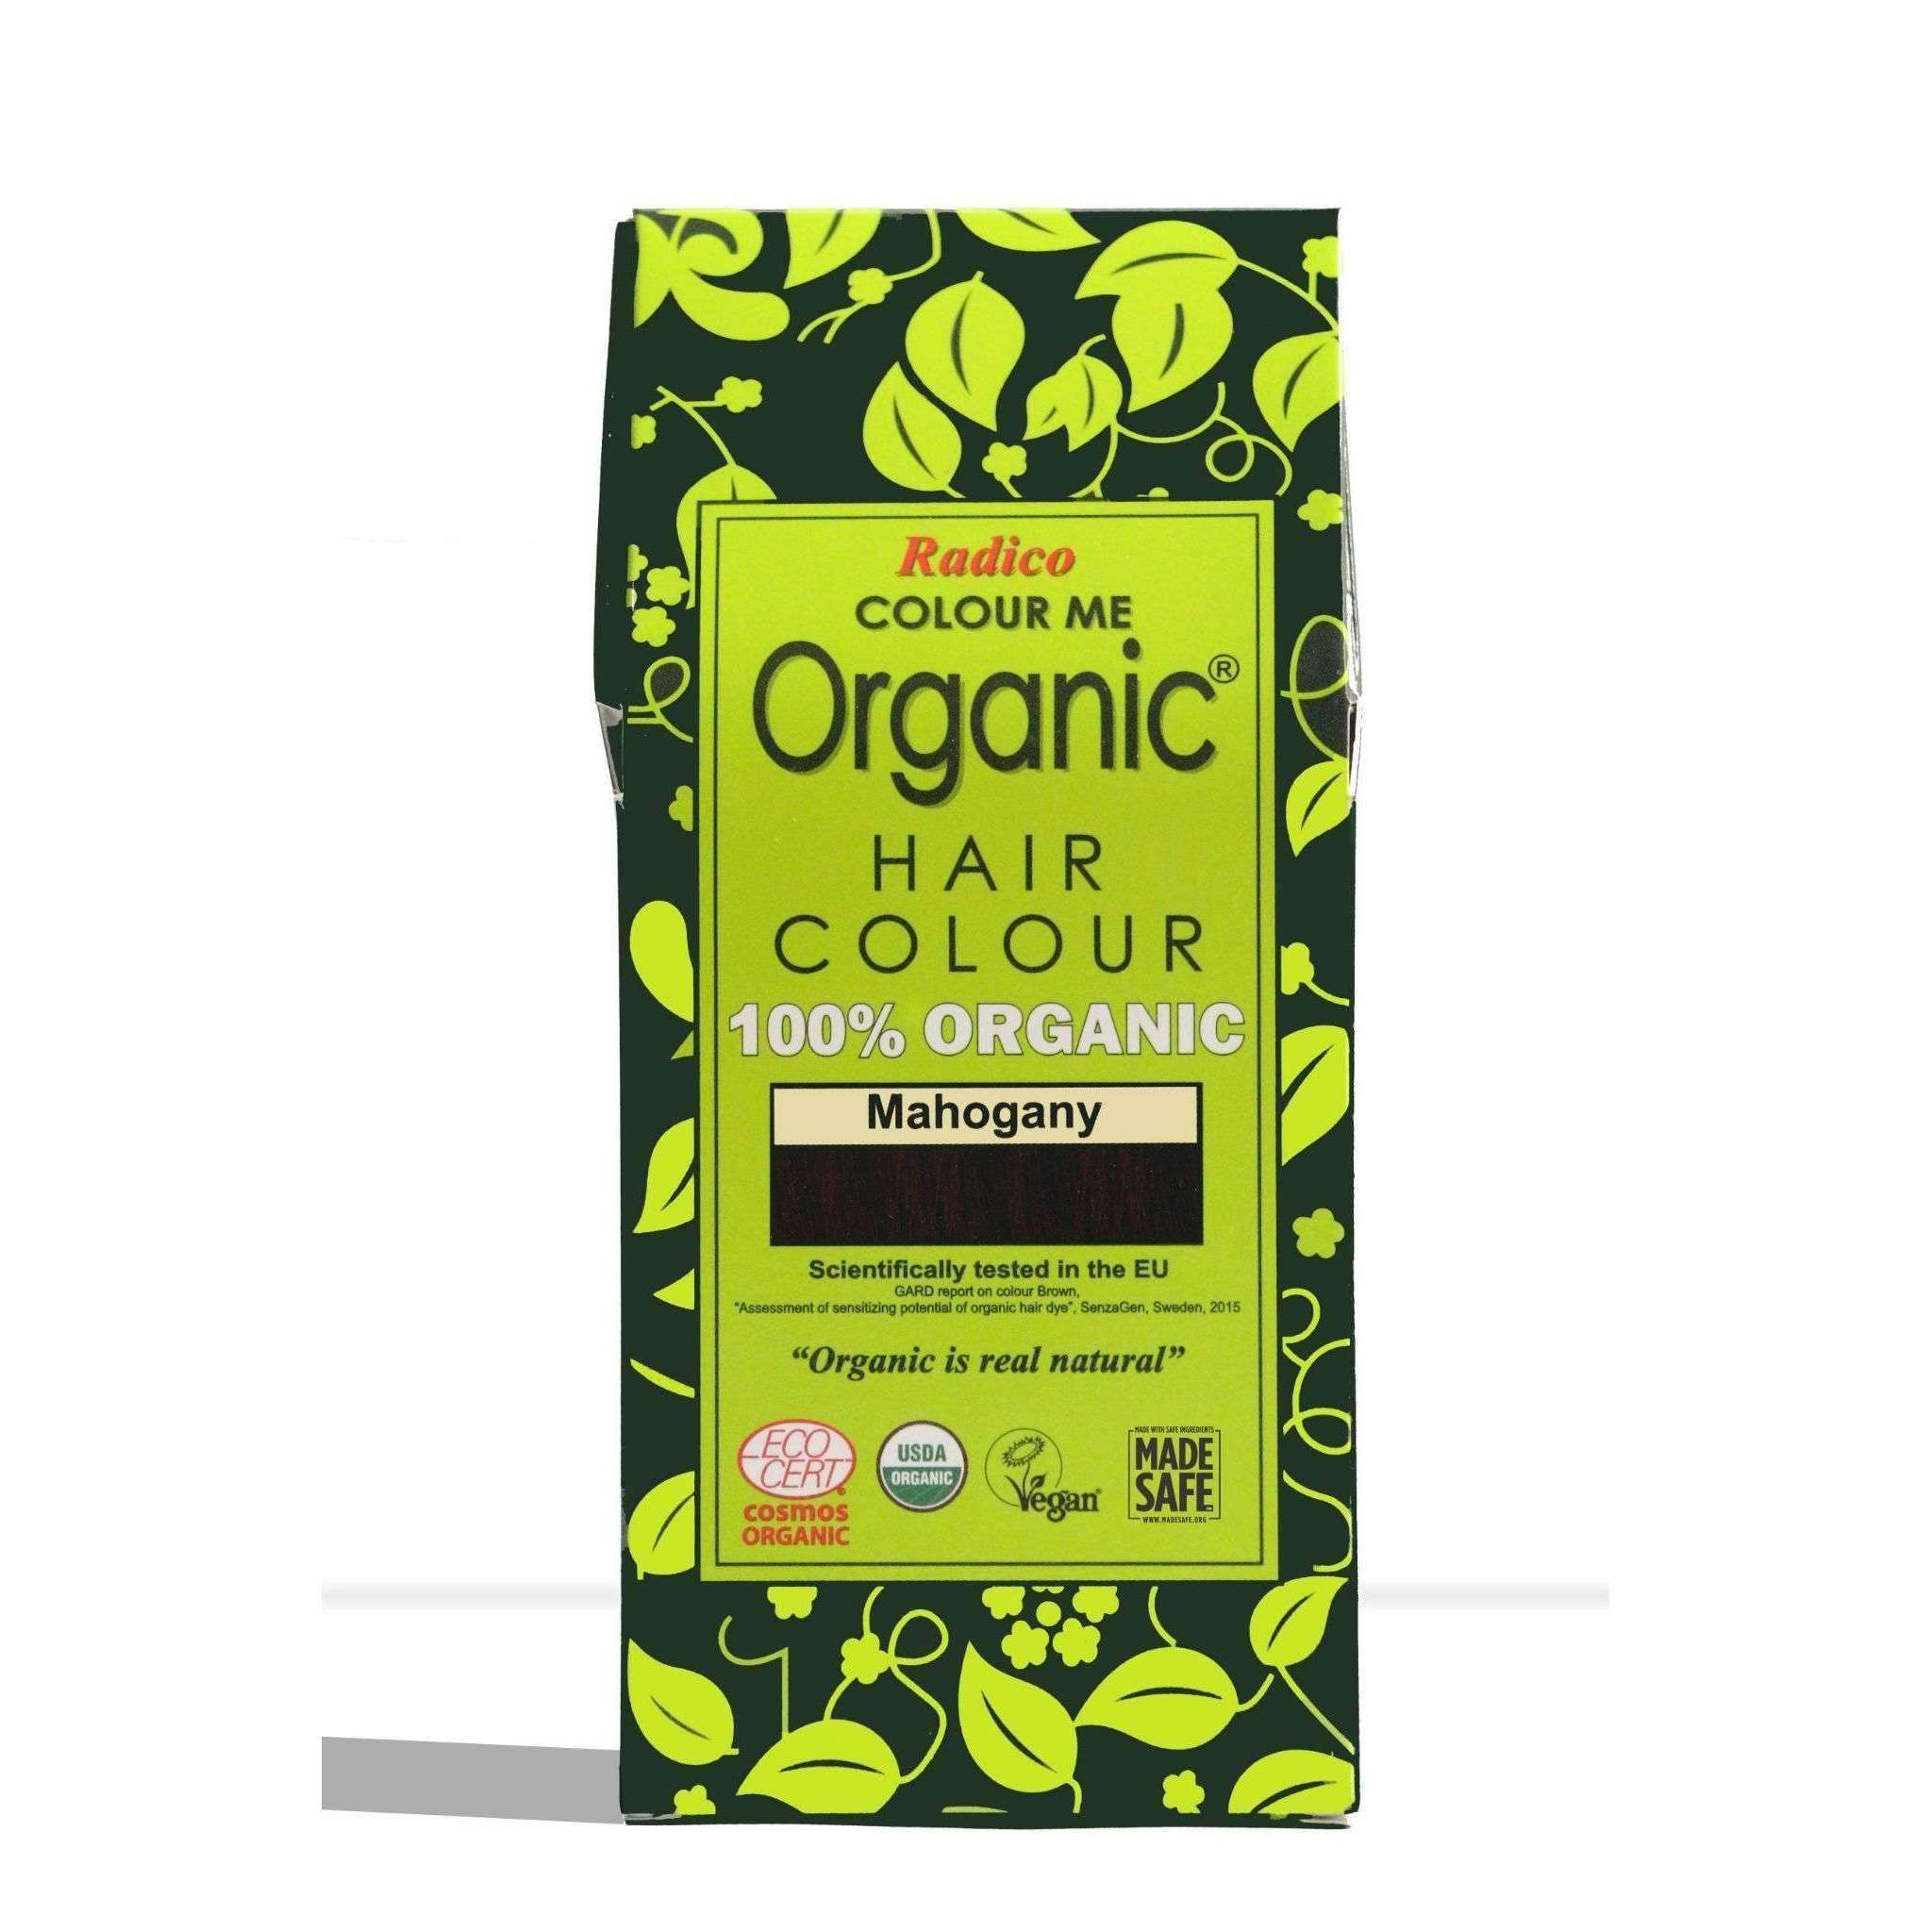 Radico Organic Hair Colour - Mahogany